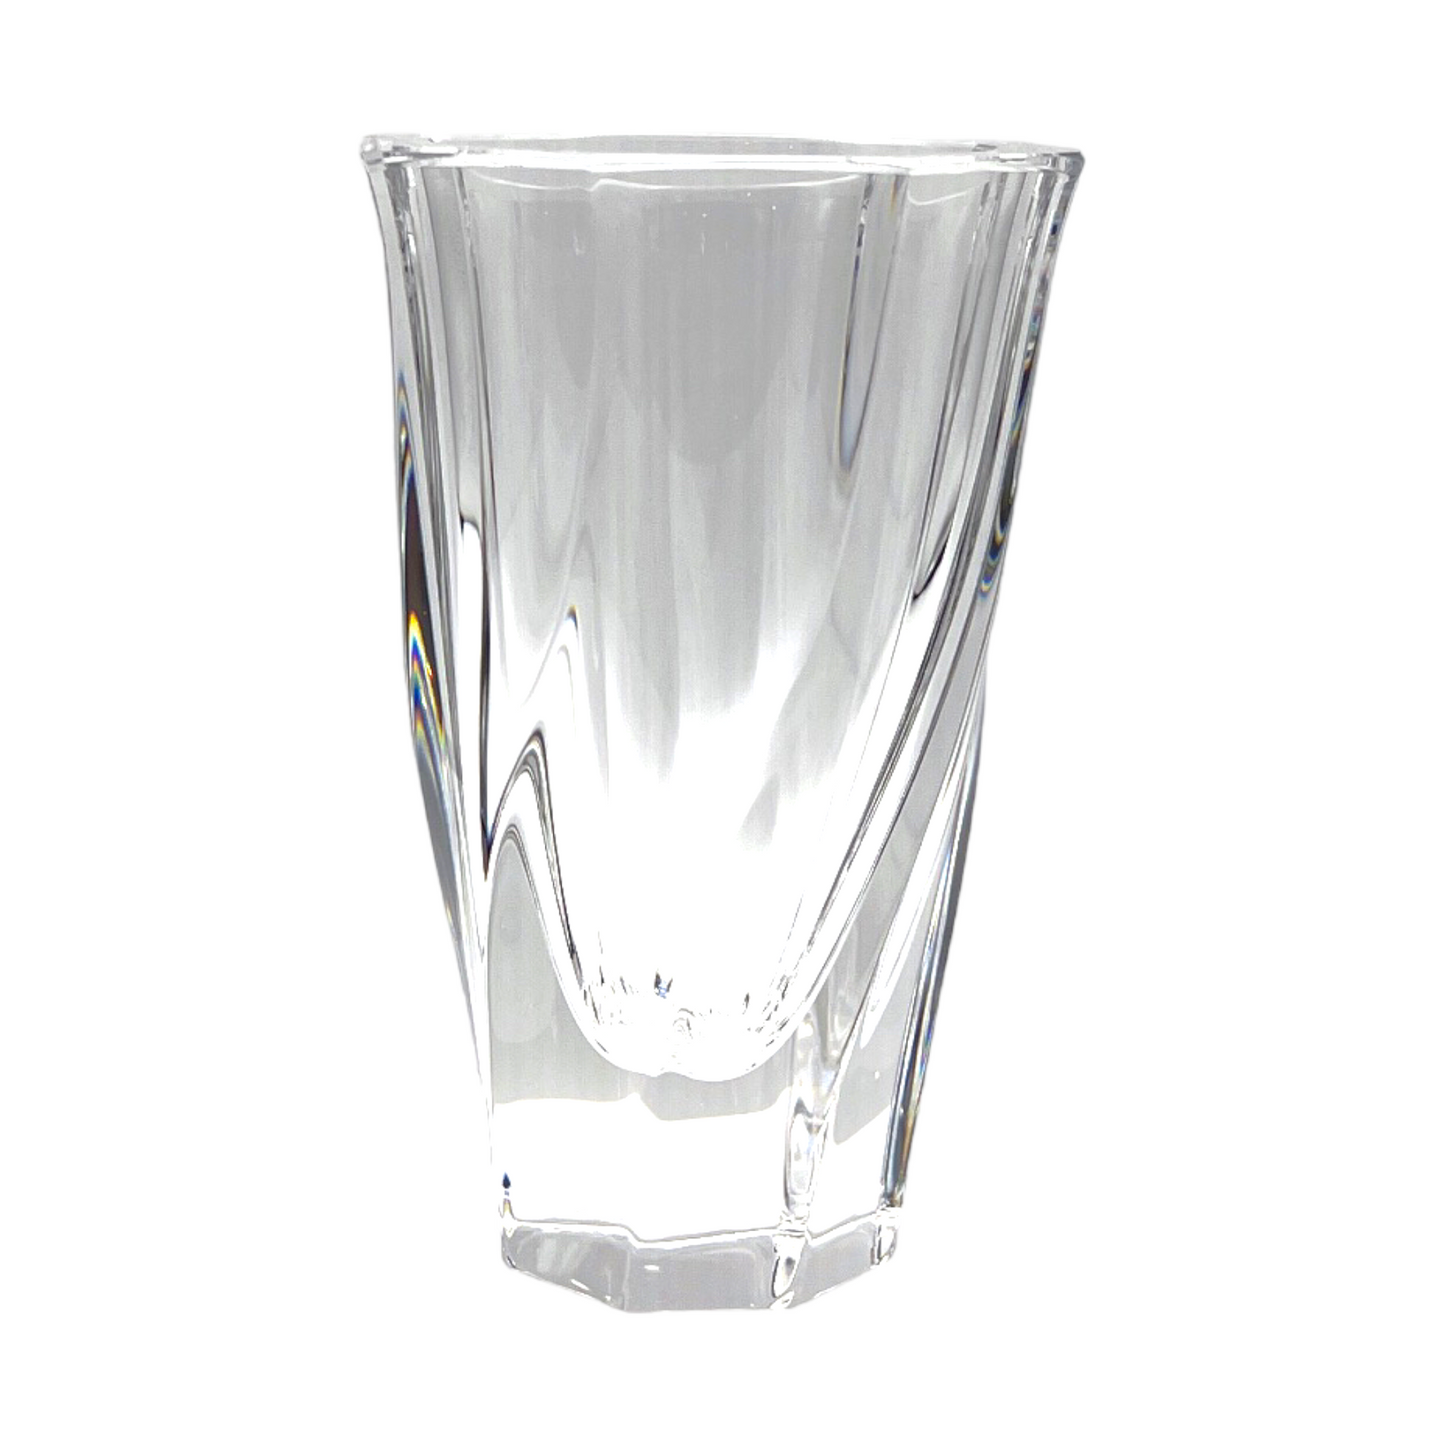 Orrefor Crystal - Residence Swirl Lead Crystal Vase - Signed - 6.25"